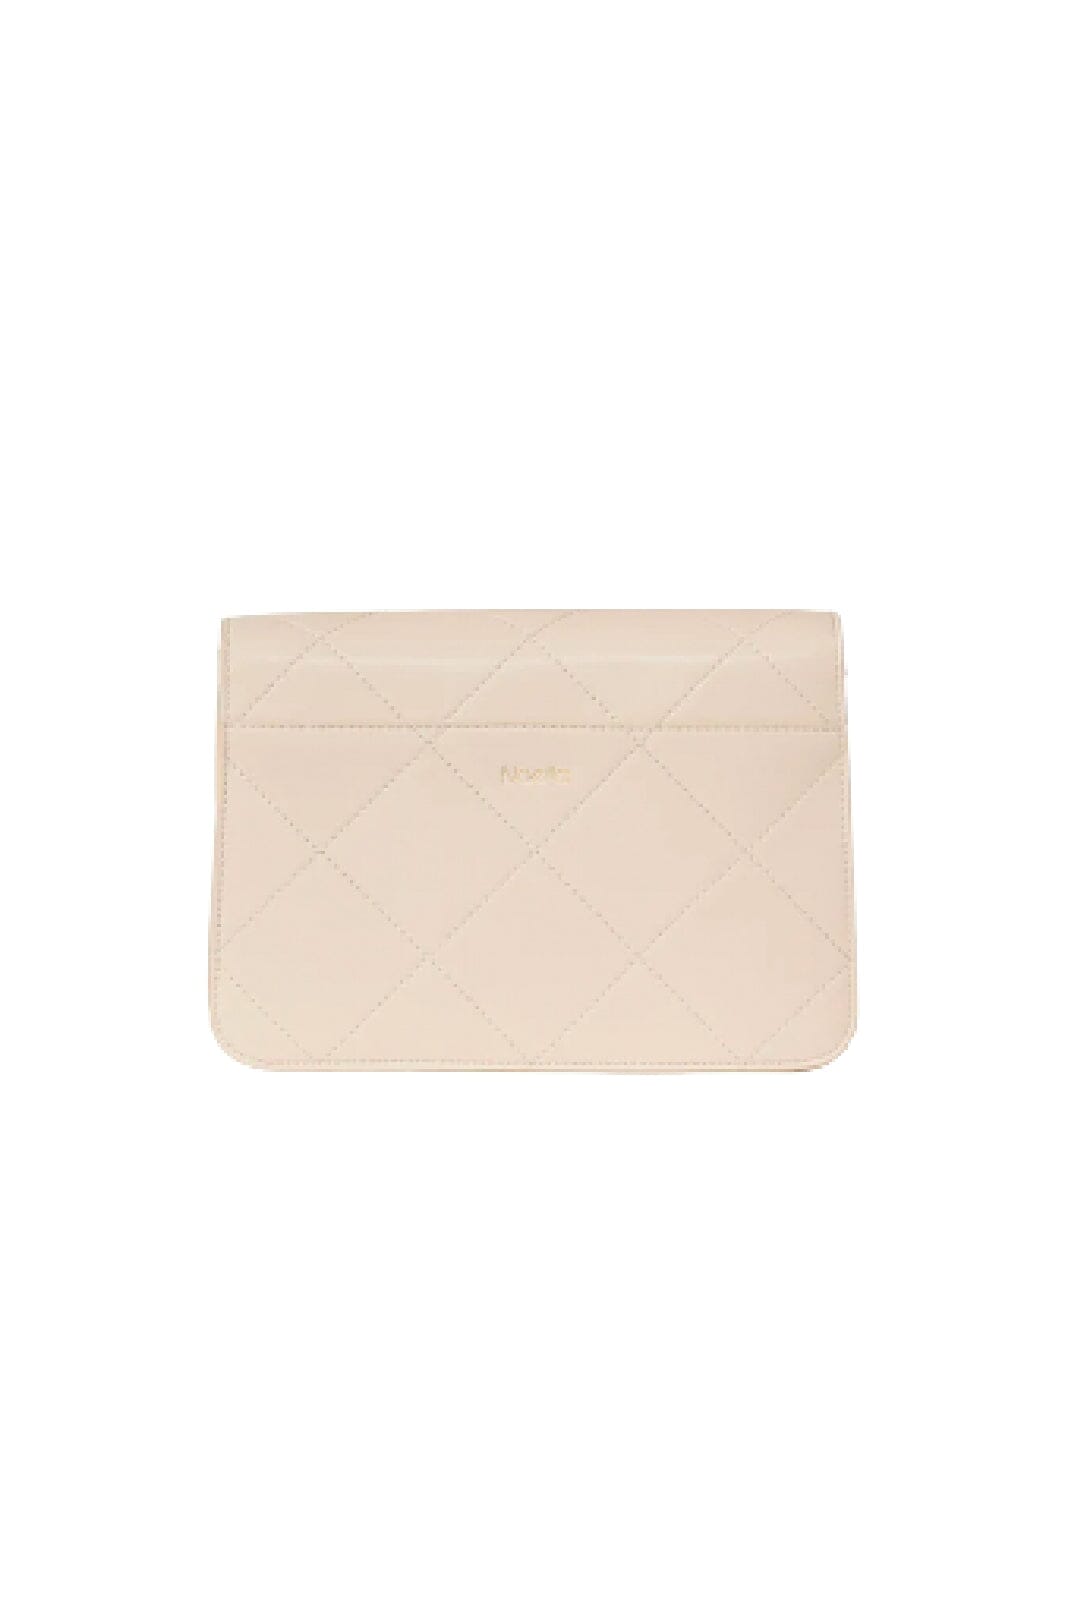 Noella - Blanca Bag Medium - 607 Nude Leather Look Tasker 